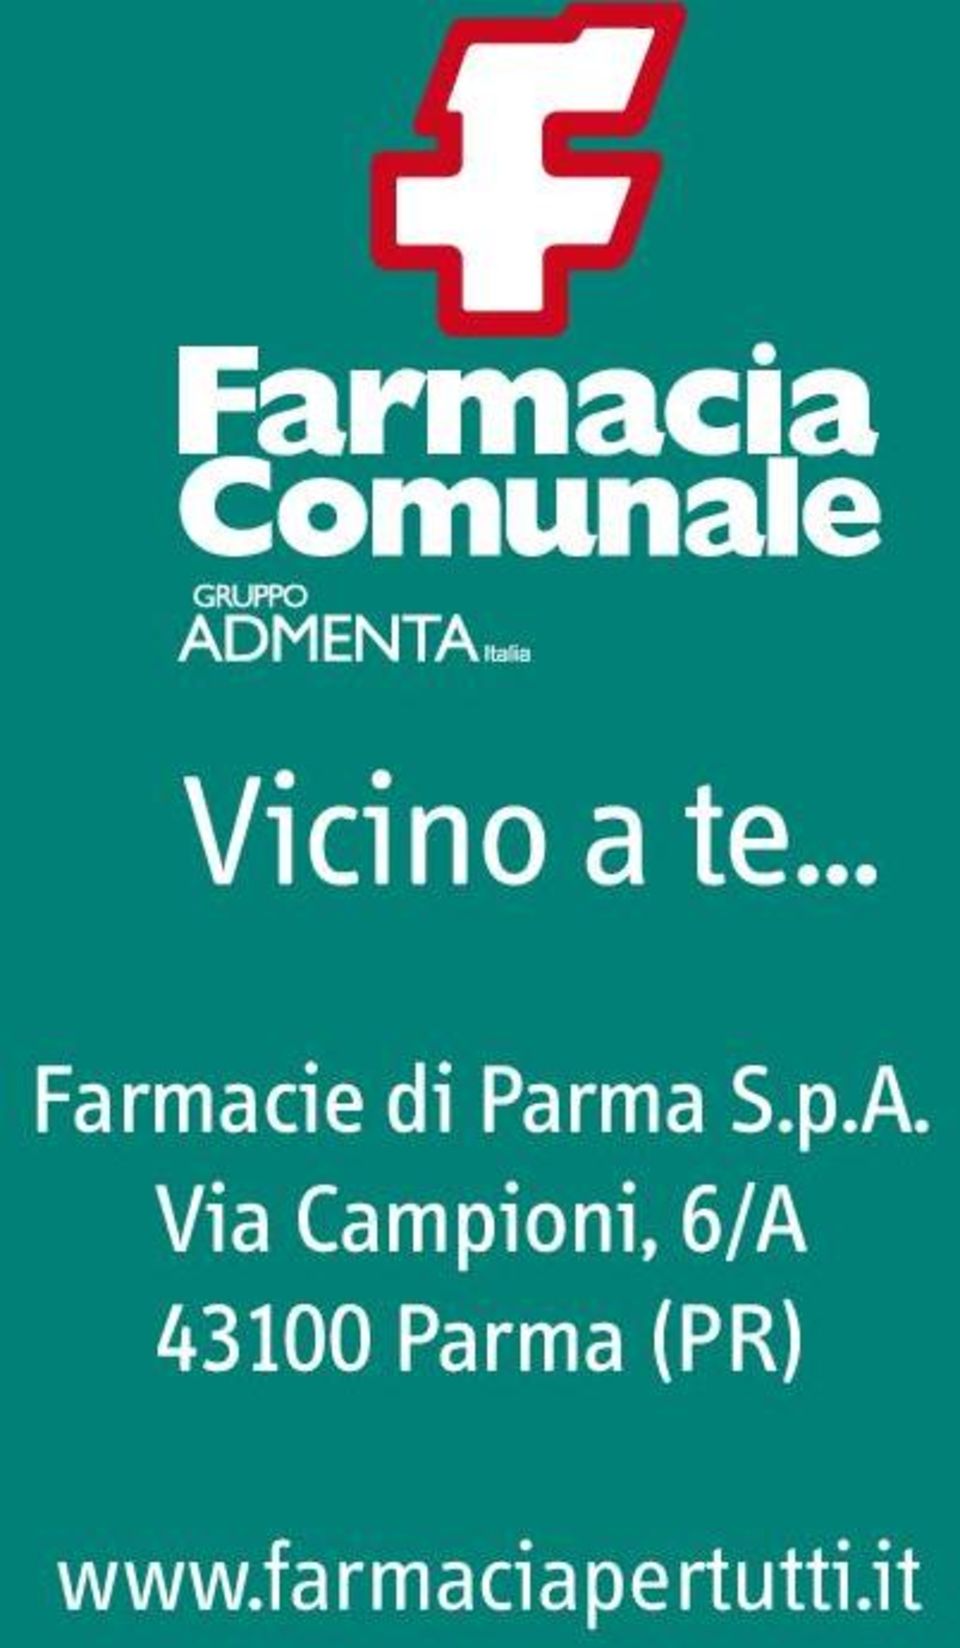 6/A 43100 Parma (PR)